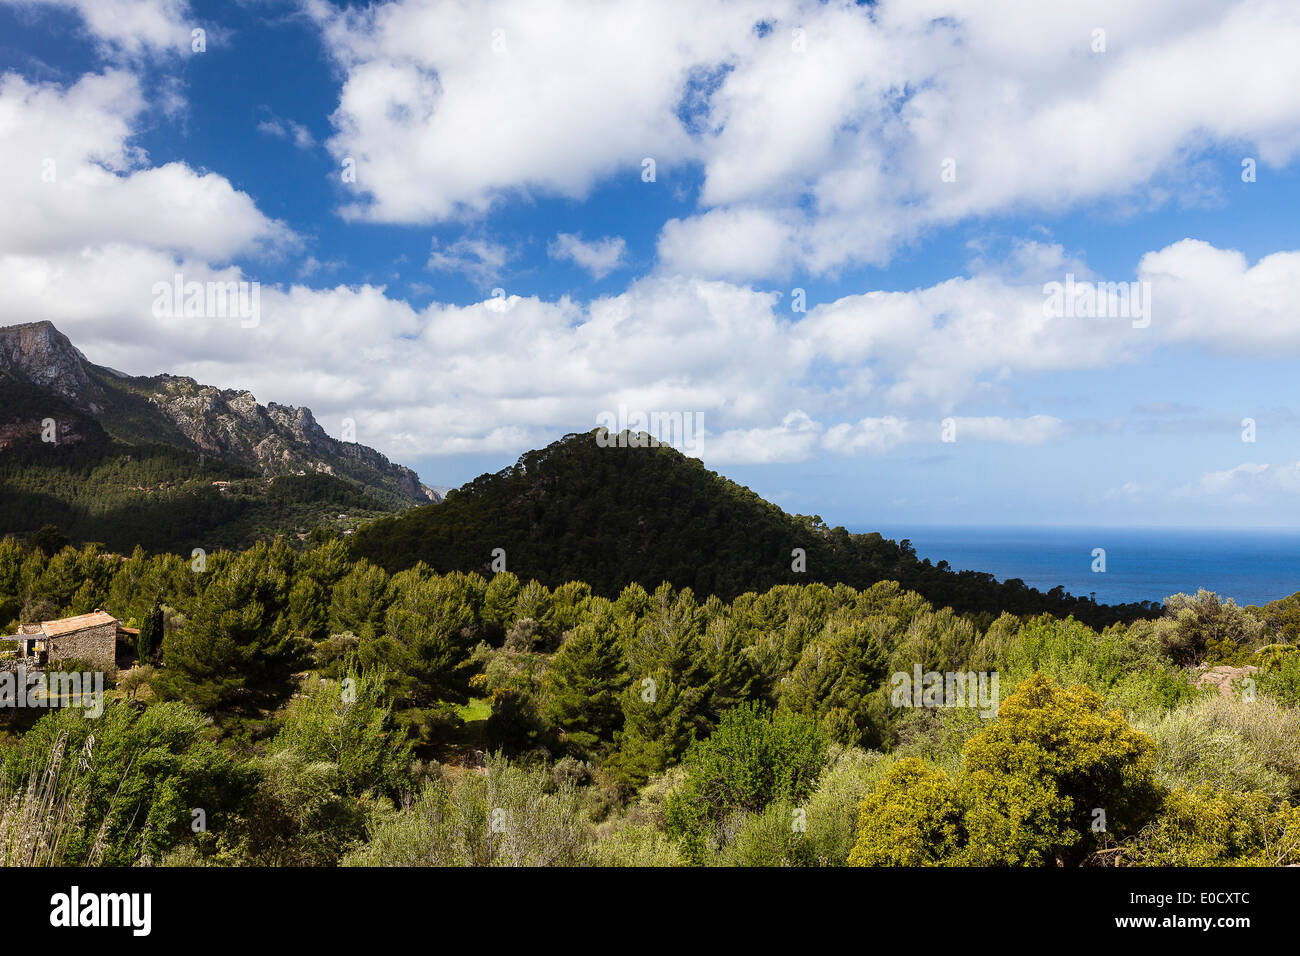 House in coast mountains near Mediterranean Sea, Estellencs, Mallorca, Spain Stock Photo